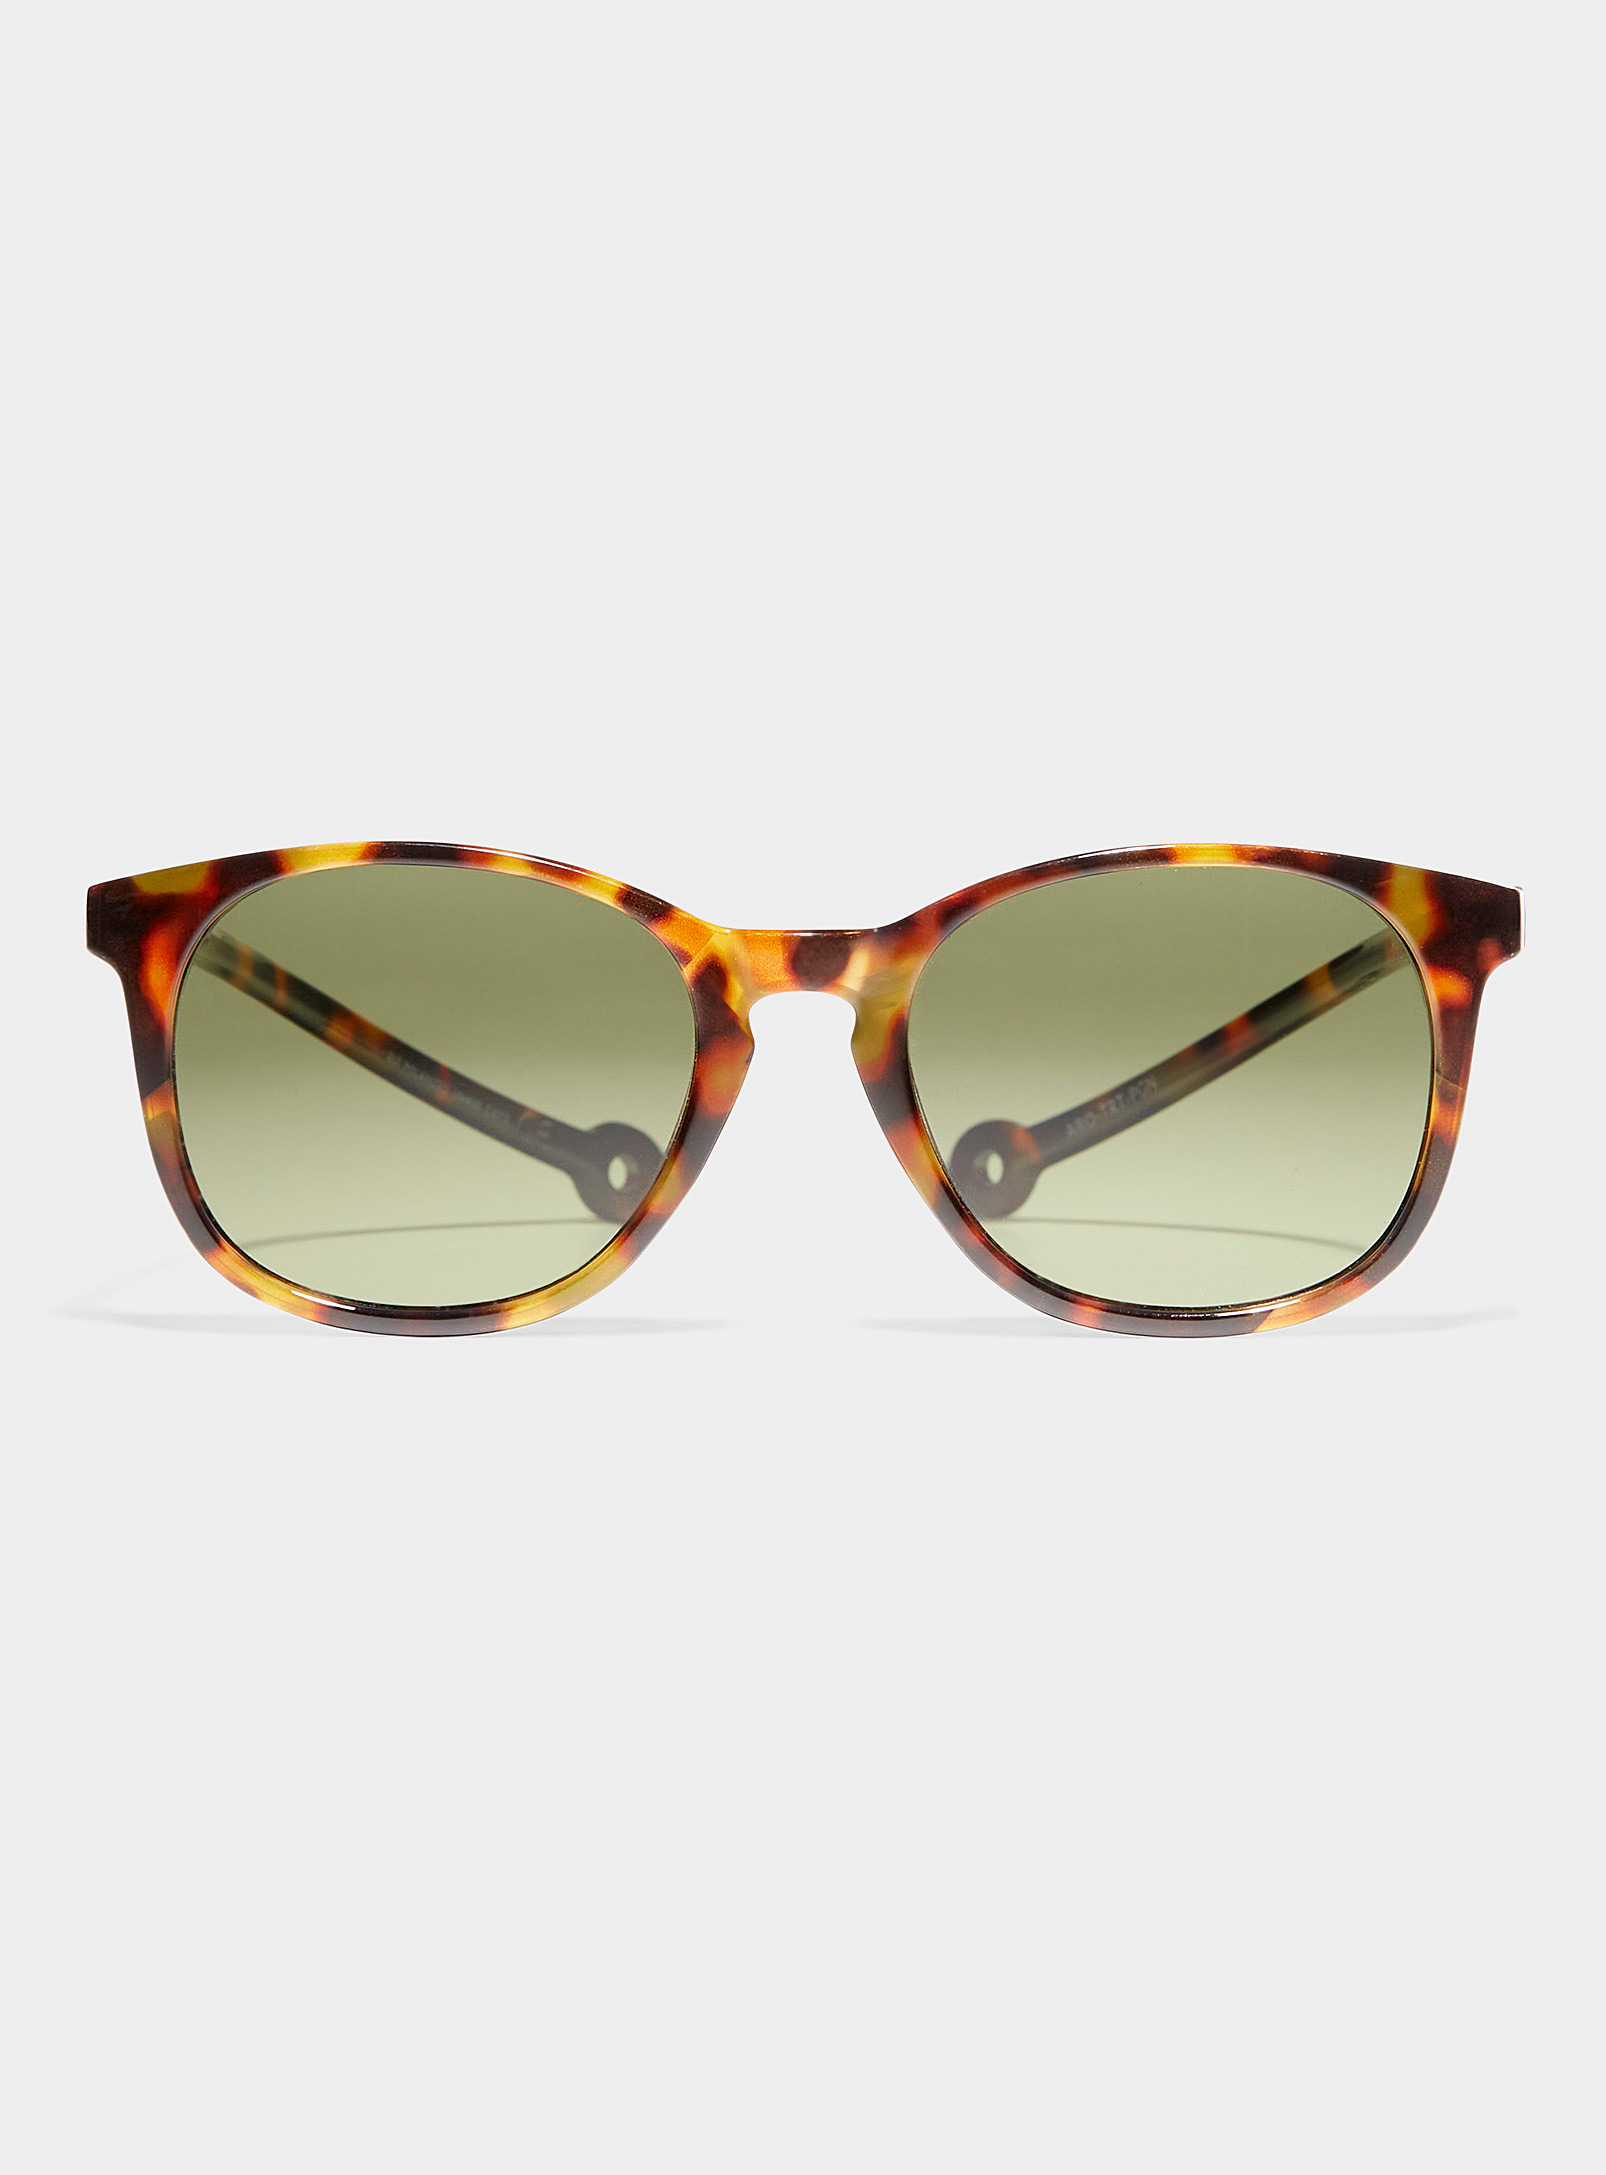 Parafina - Women's Arroyo round sunglasses